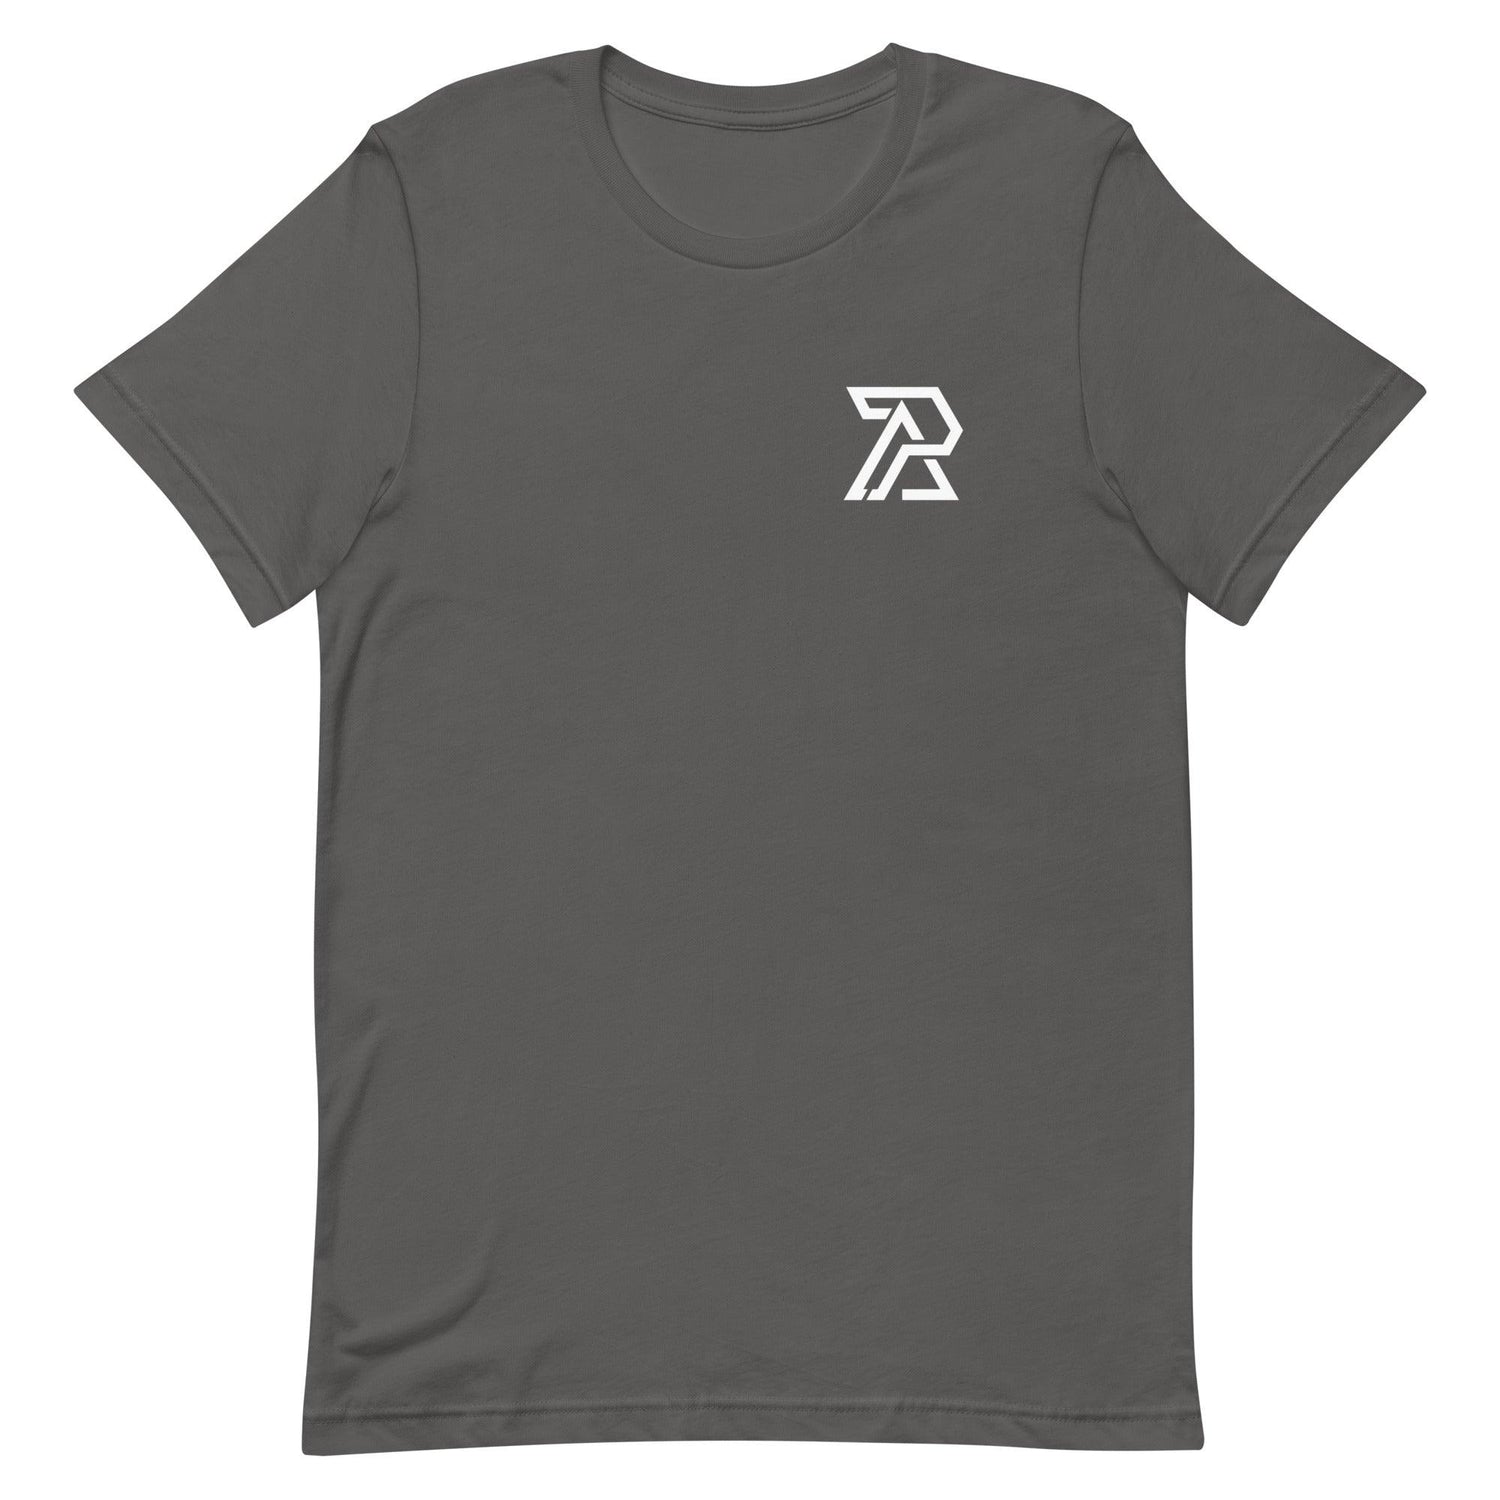 Philip Abner “basics” t-shirt - Fan Arch